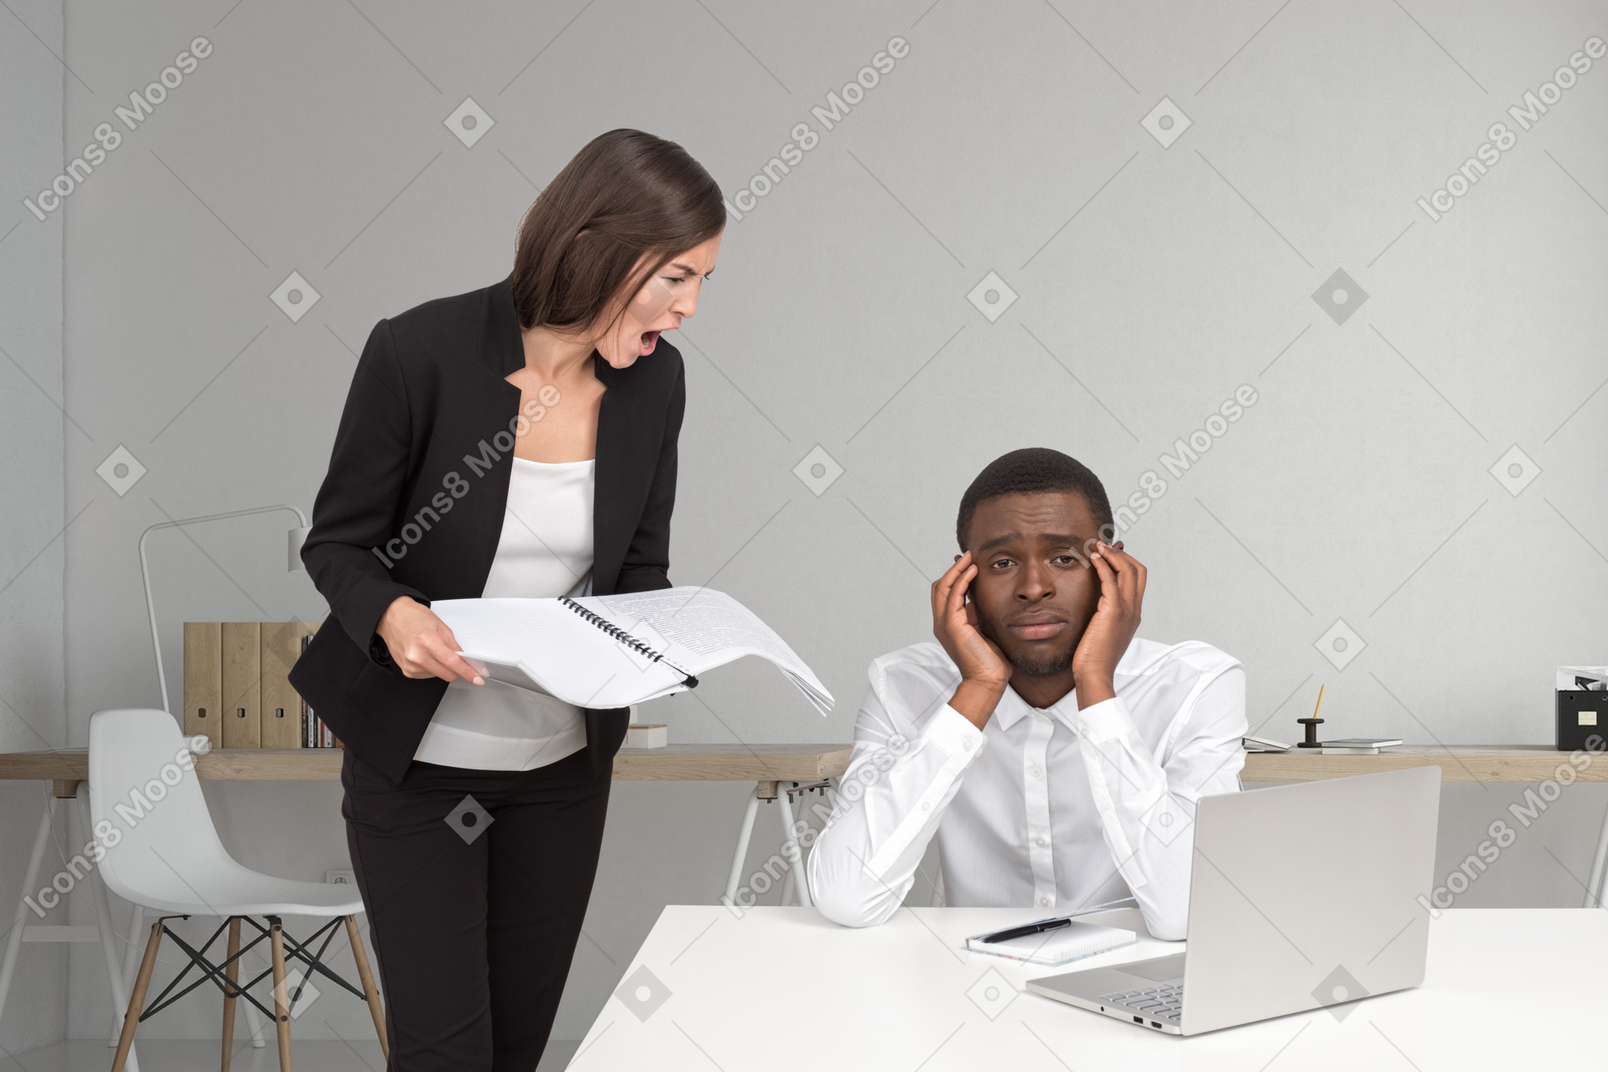 Female boss yelling at employee at laptop